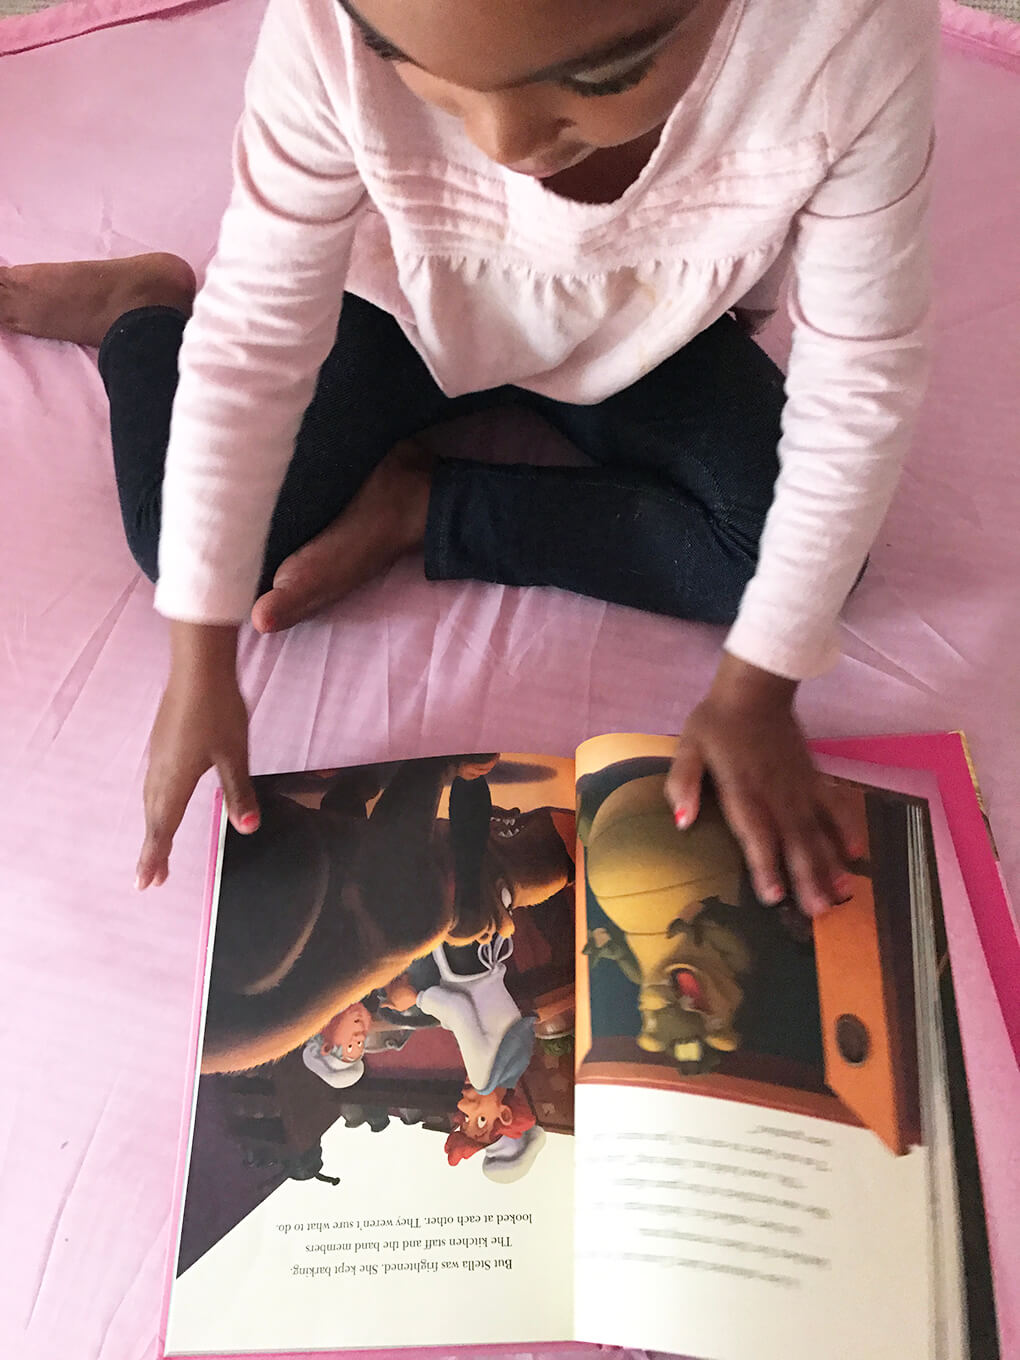 Her Favorite Disney Princess sarahkayhoffman.com Samarah reading